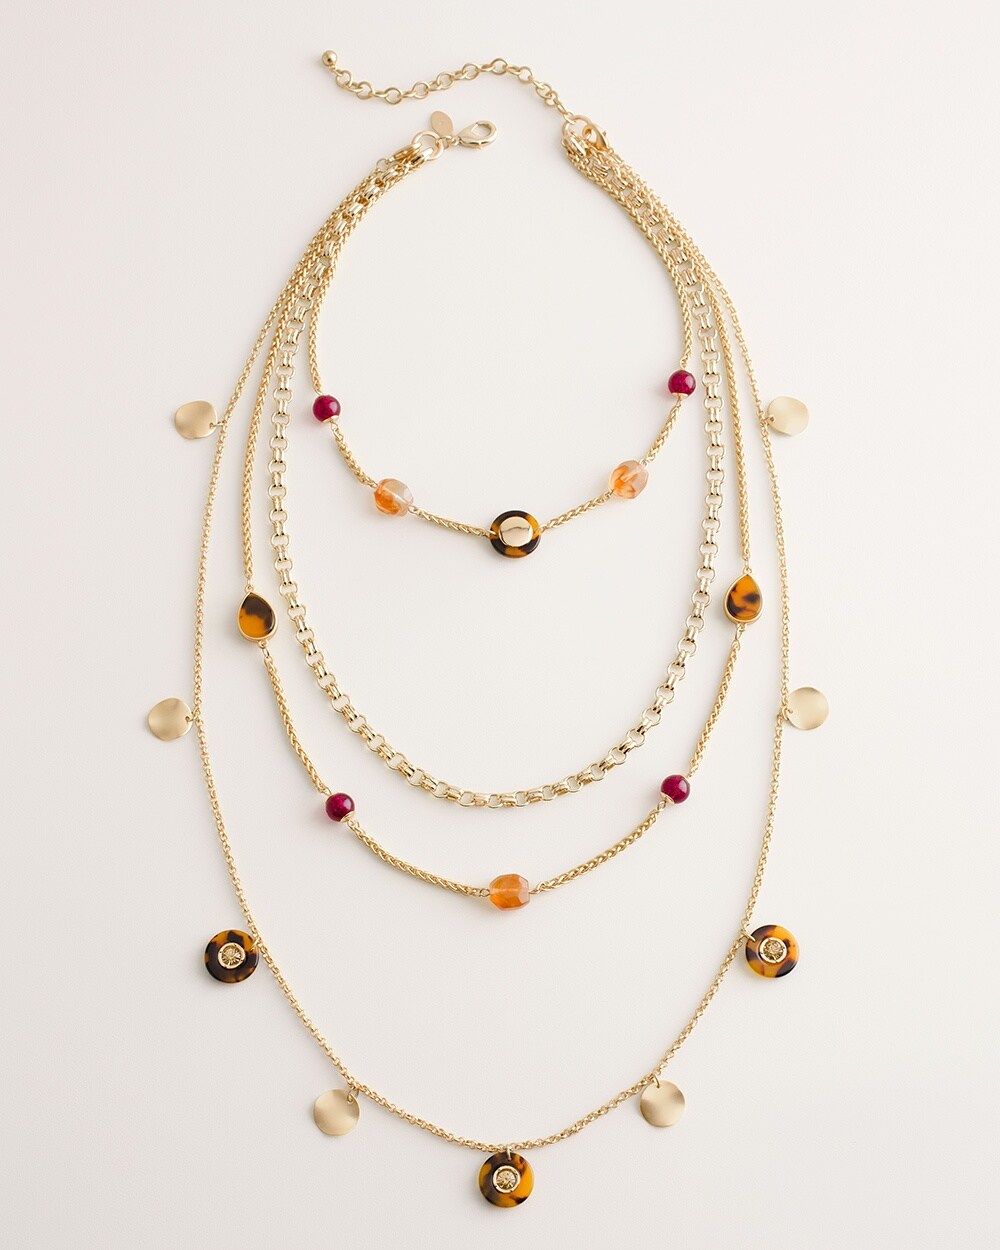 Convertible Faux-Tortoiseshell and Shiraz-Hued Multi-Strand Necklace